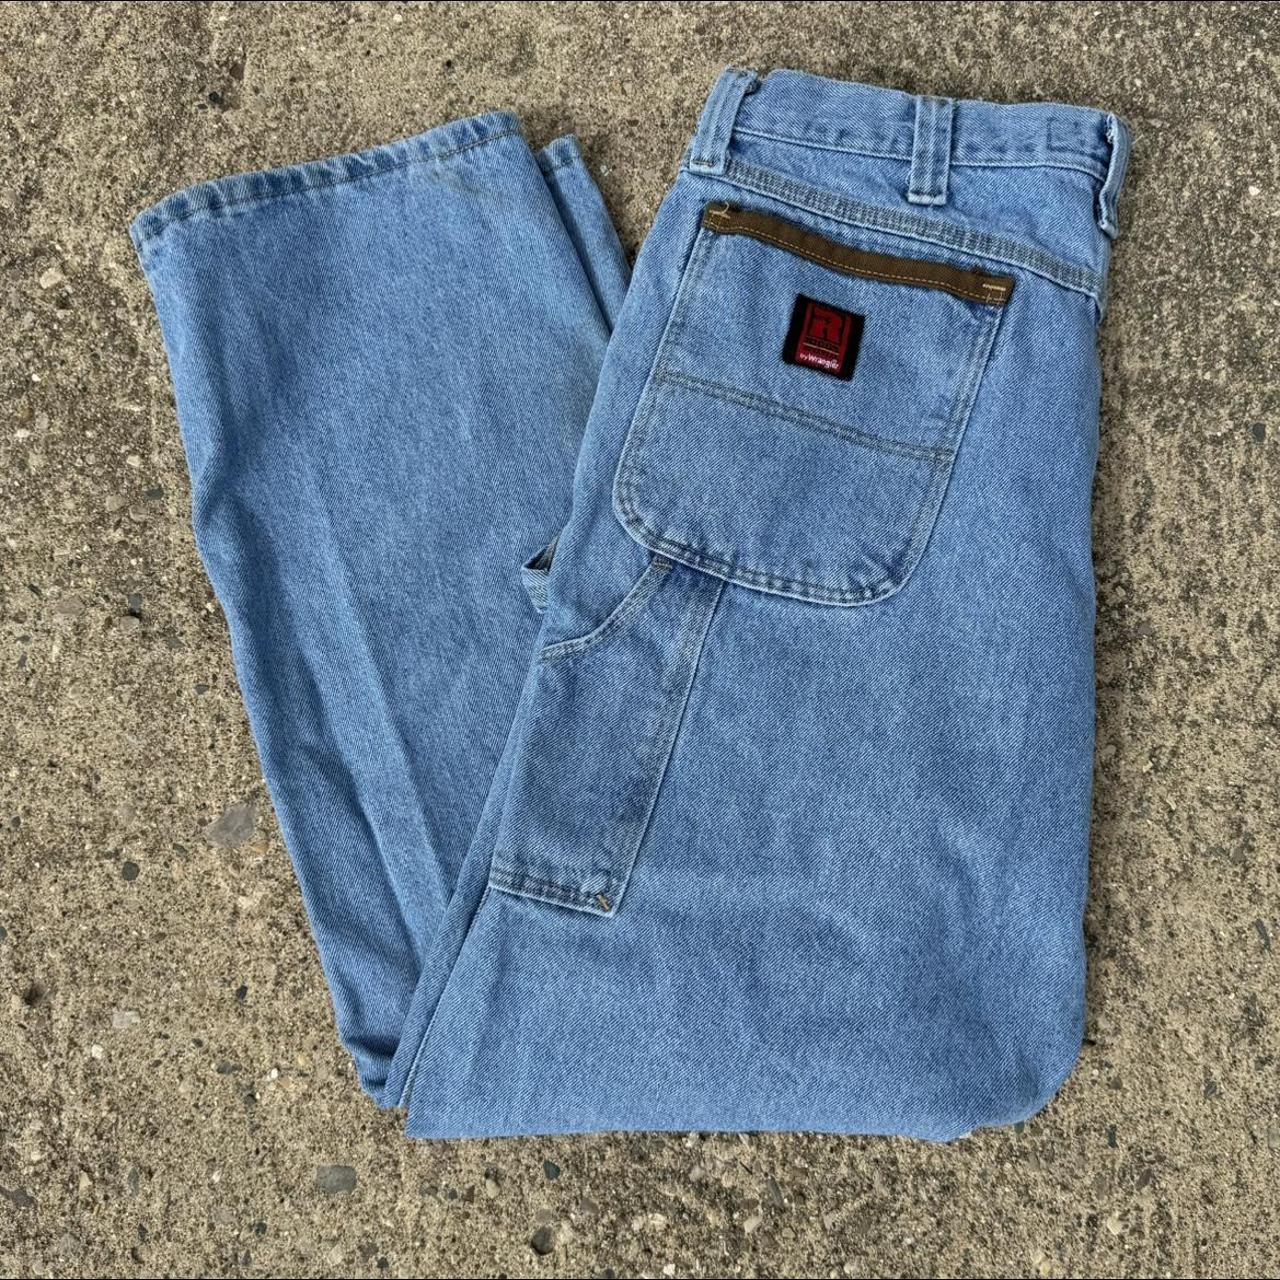 Wrangler Men's Riggs Workwear Carpenter Jeans